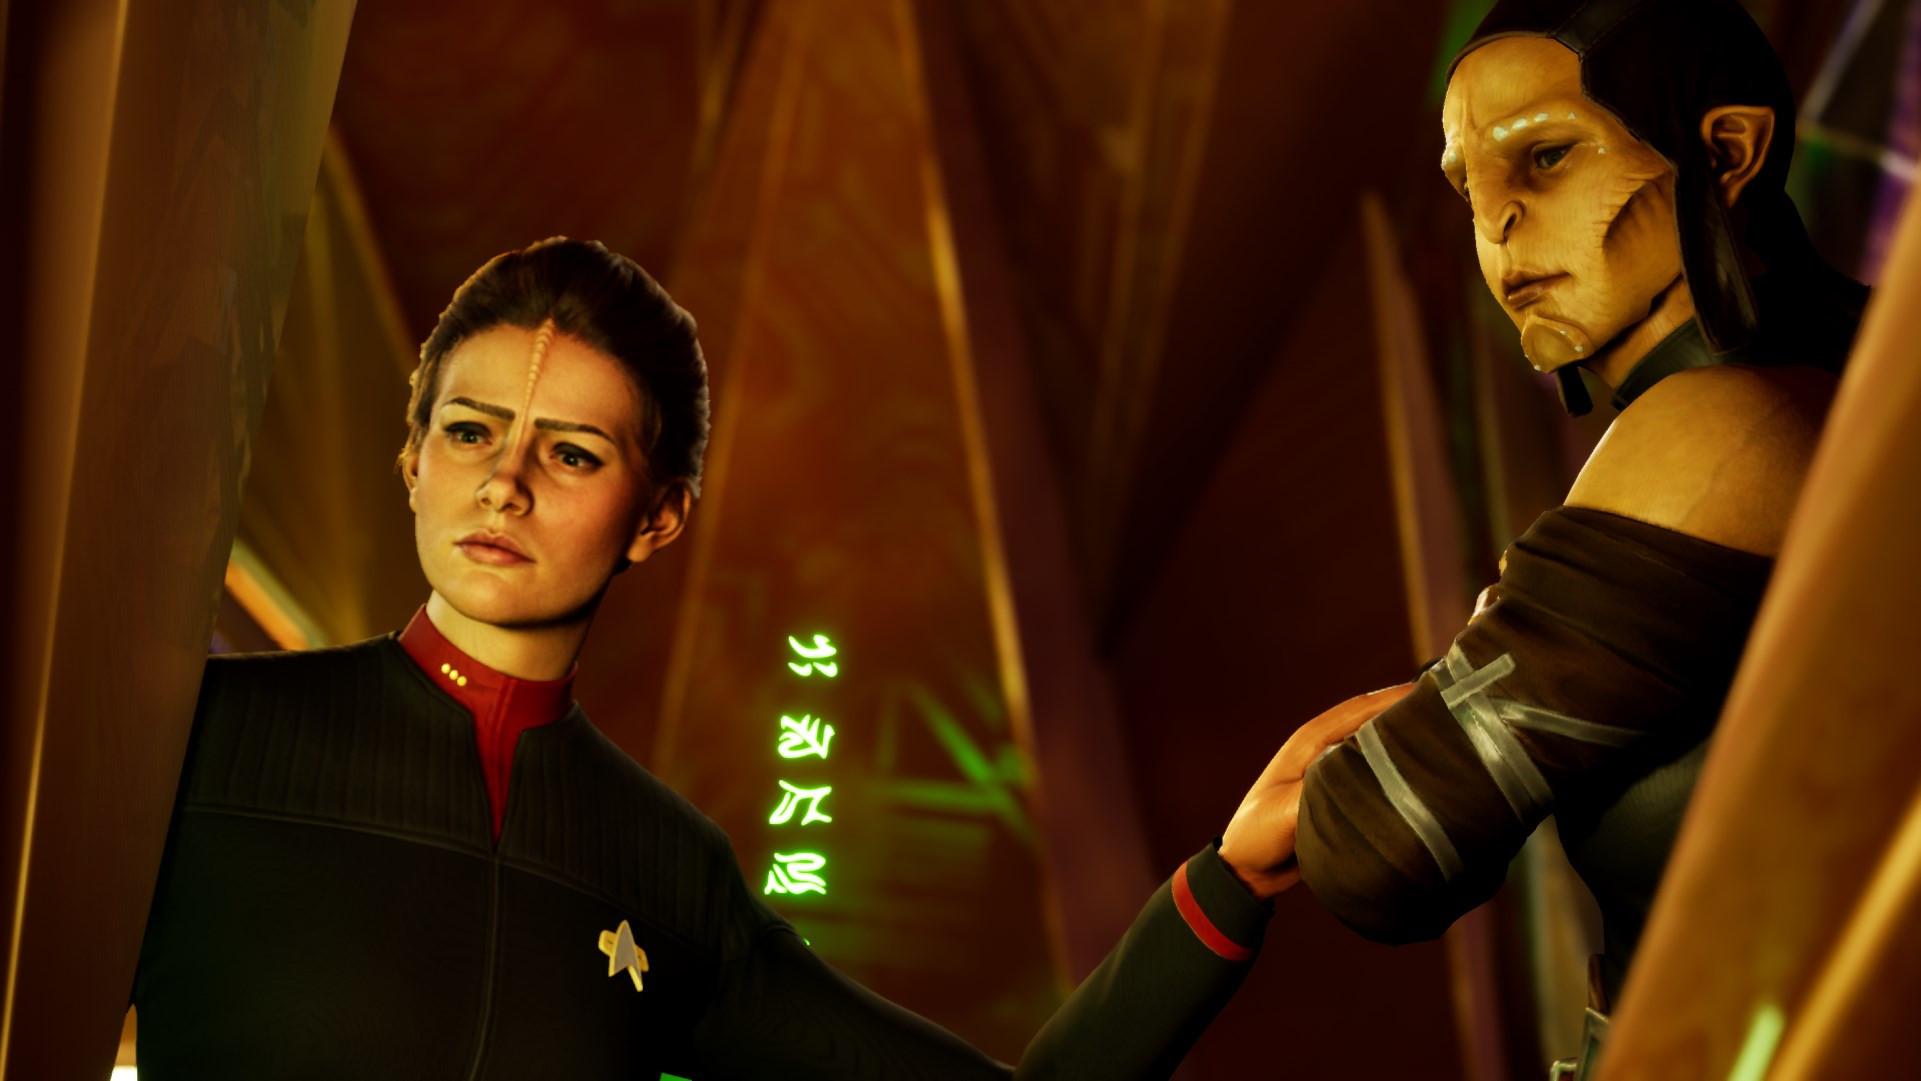 Star Trek: Resurgence Epic Games Account